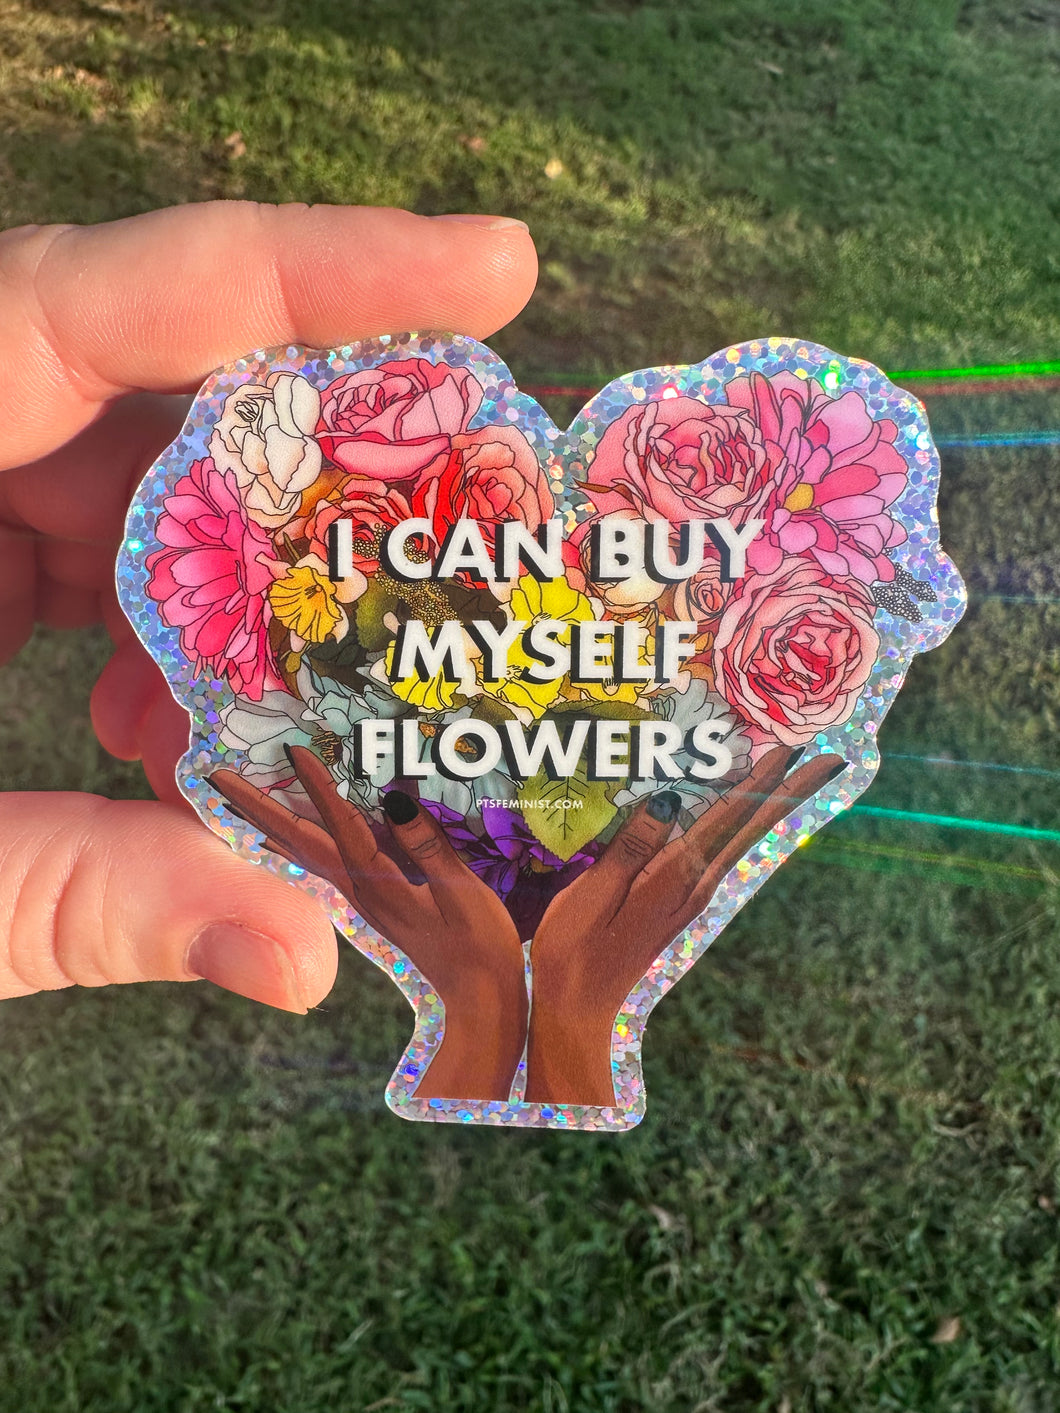 I Can Buy Myself Flowers Sticker